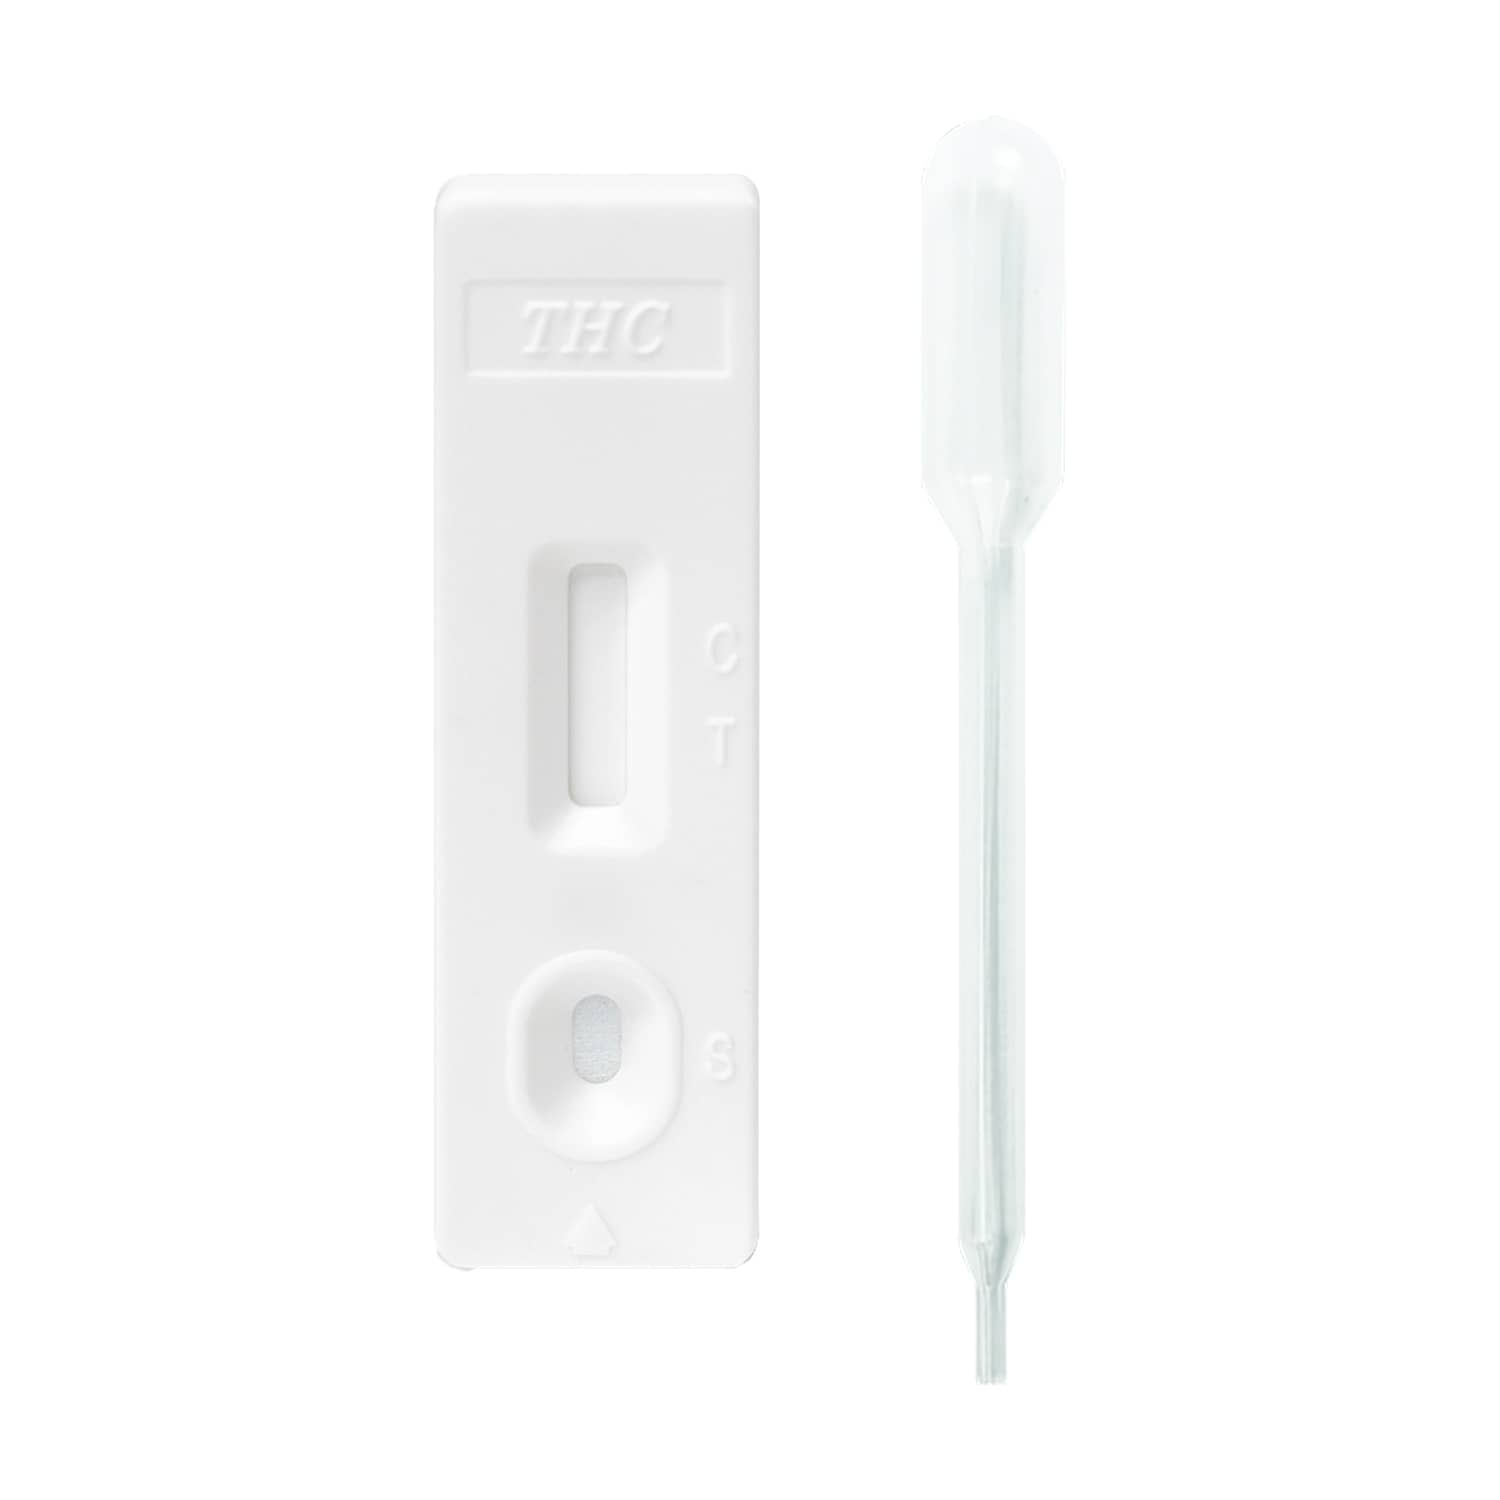 Surestep™ Urine Drug Test Cassette (Thc) For The Detection Of Thc In Urine Samples